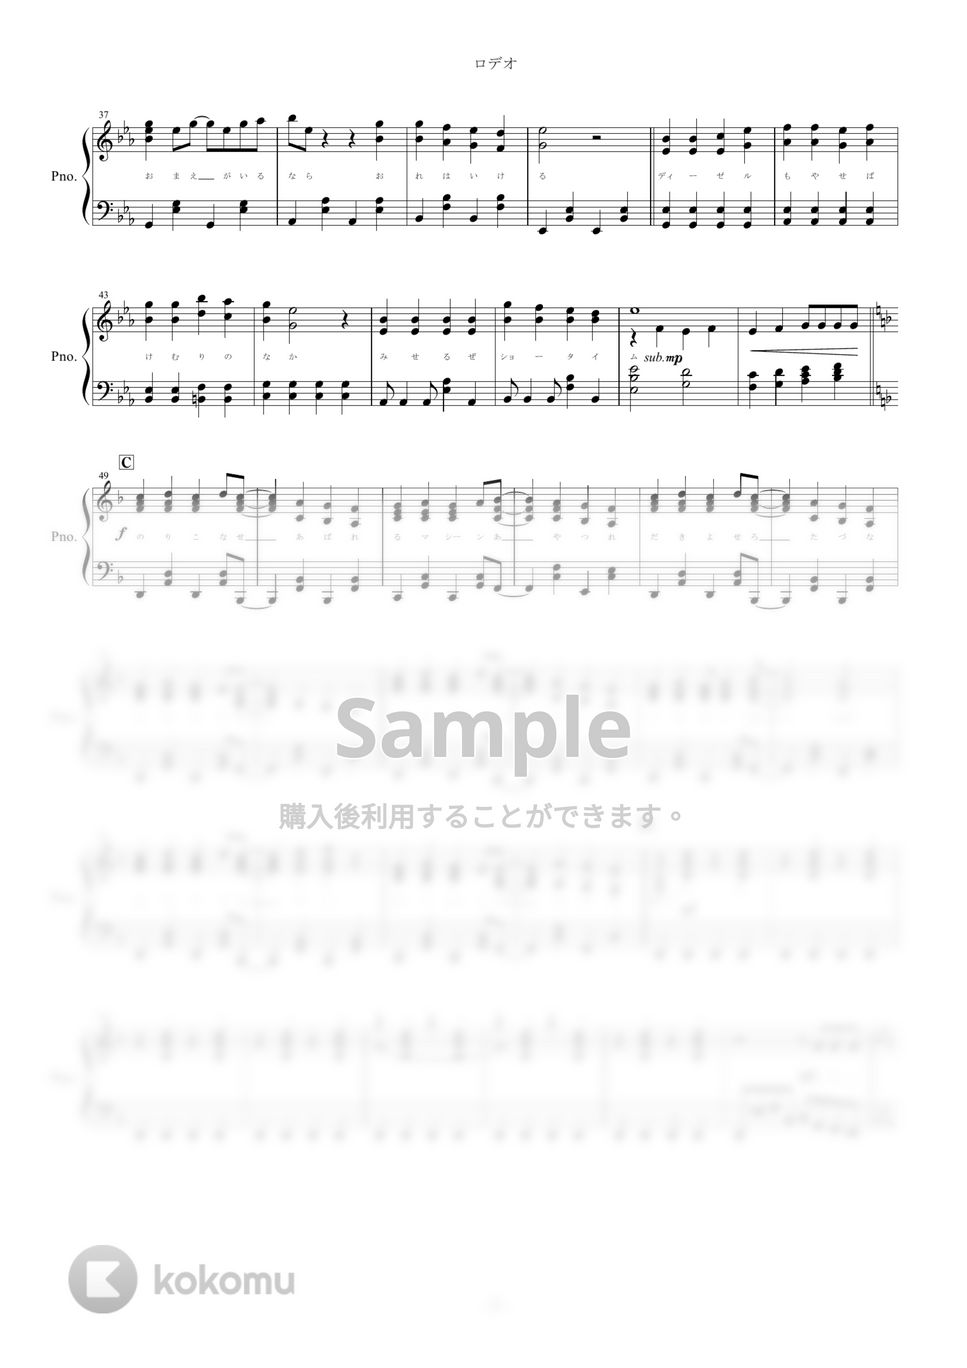 CHiCO with HoneyWorks - ロデオ feat. sana (ピアノ楽譜/全６ページ) by yoshi